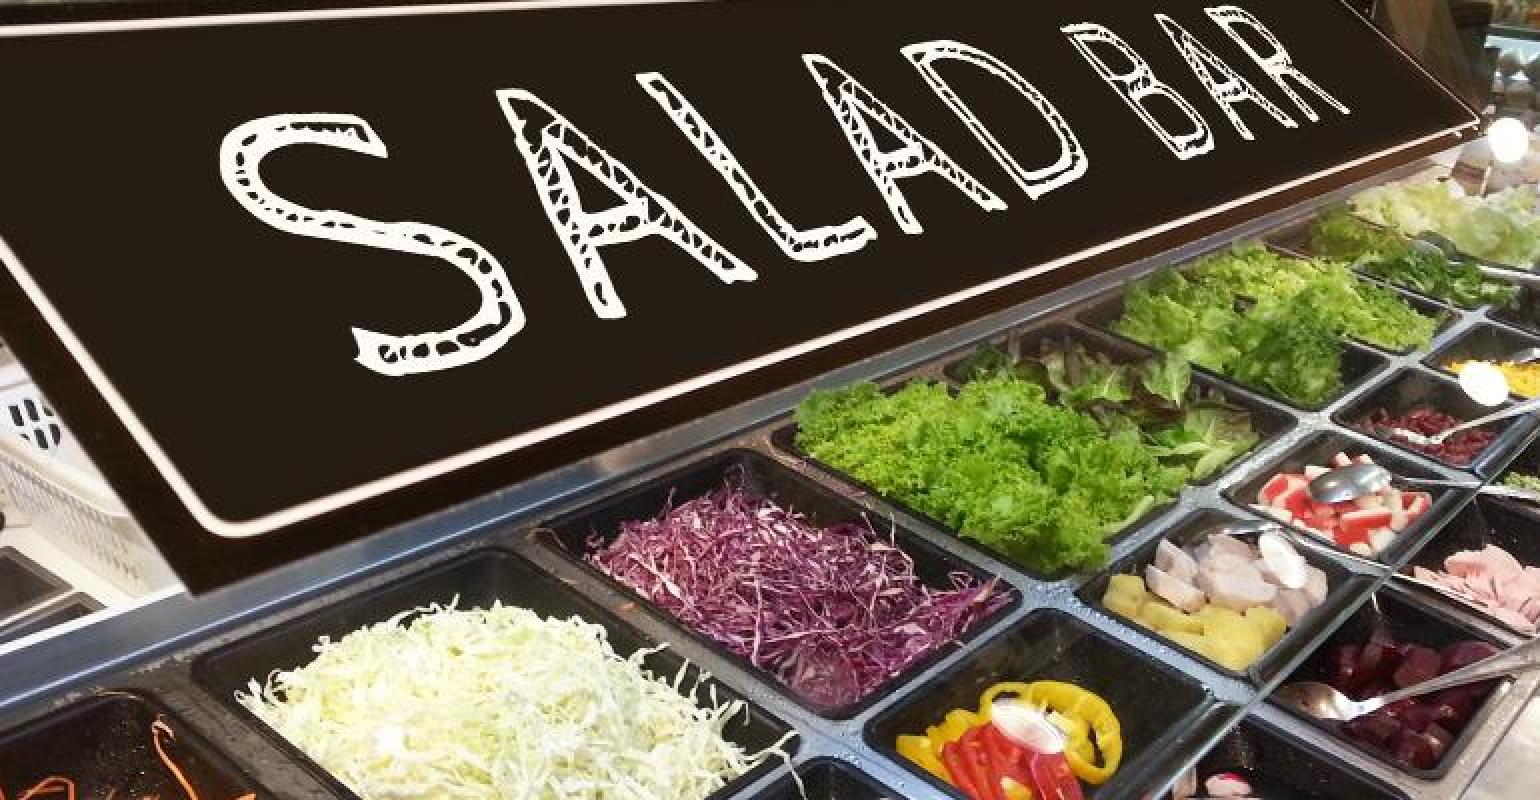 https://www.supermarketnews.com/sites/supermarketnews.com/files/styles/article_featured_retina/public/salad-bar-getty-promo.jpg?itok=e3XmuMso